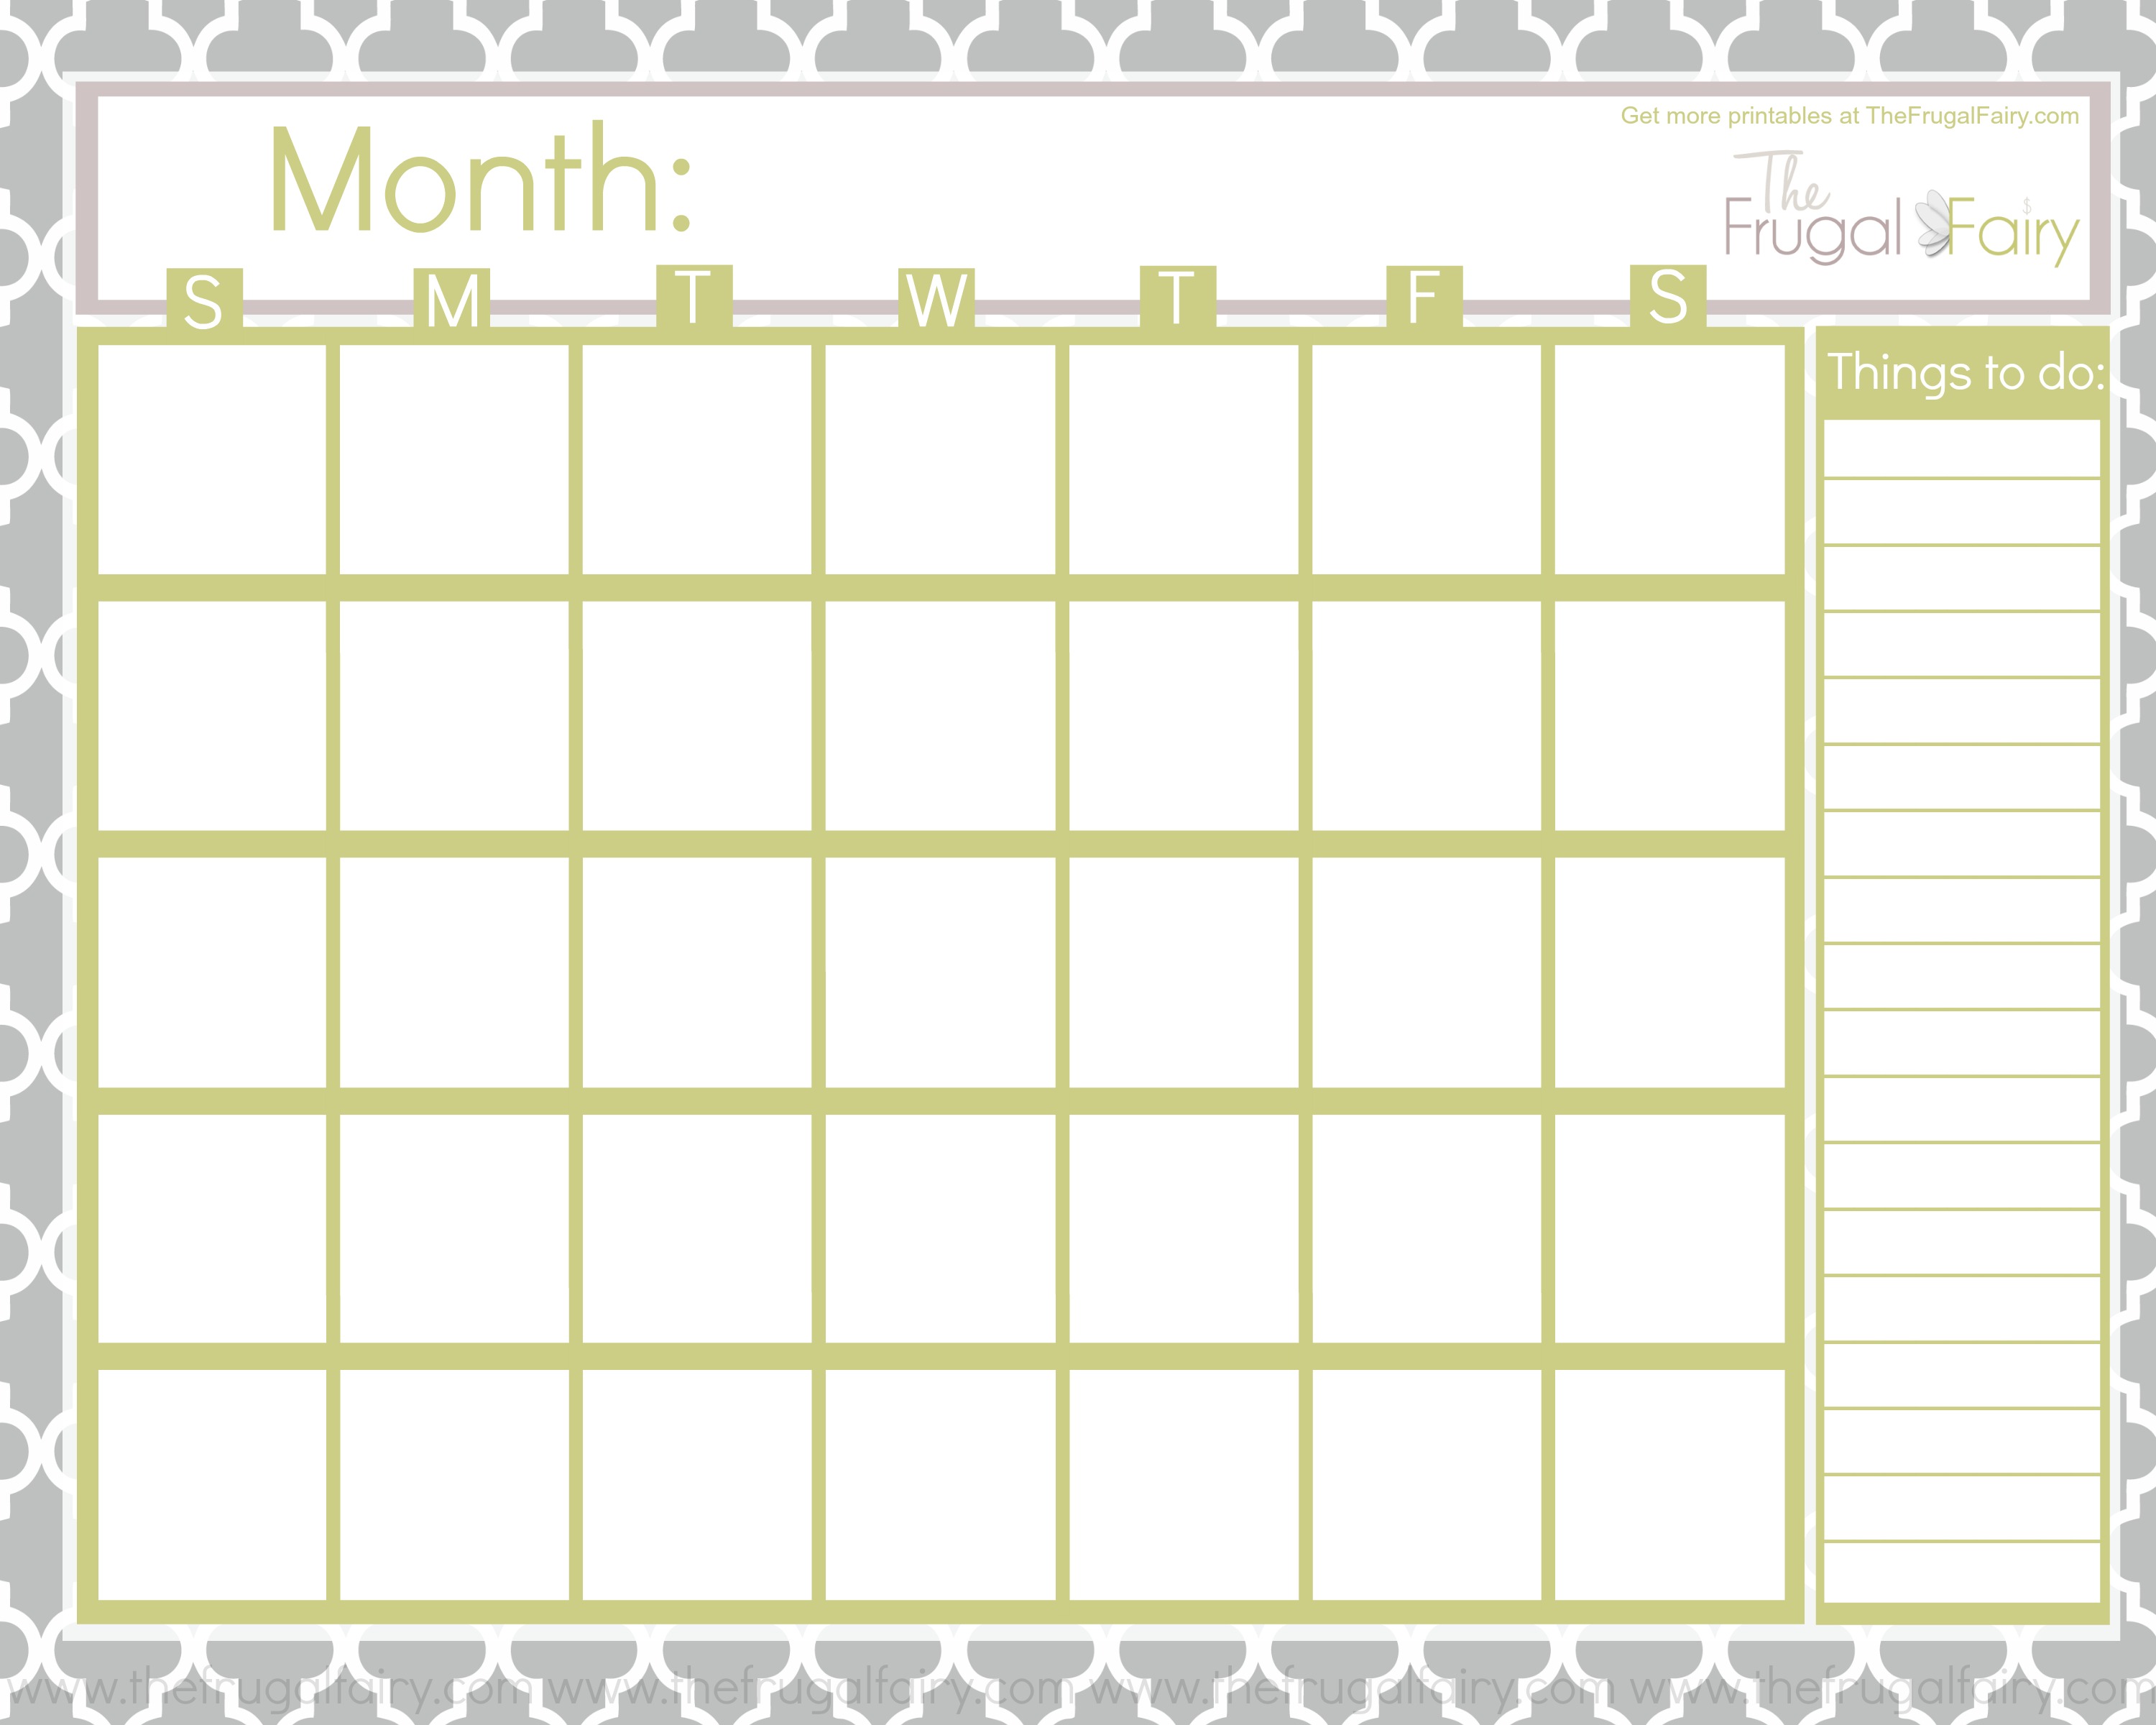 Blank Calendar Fotolip